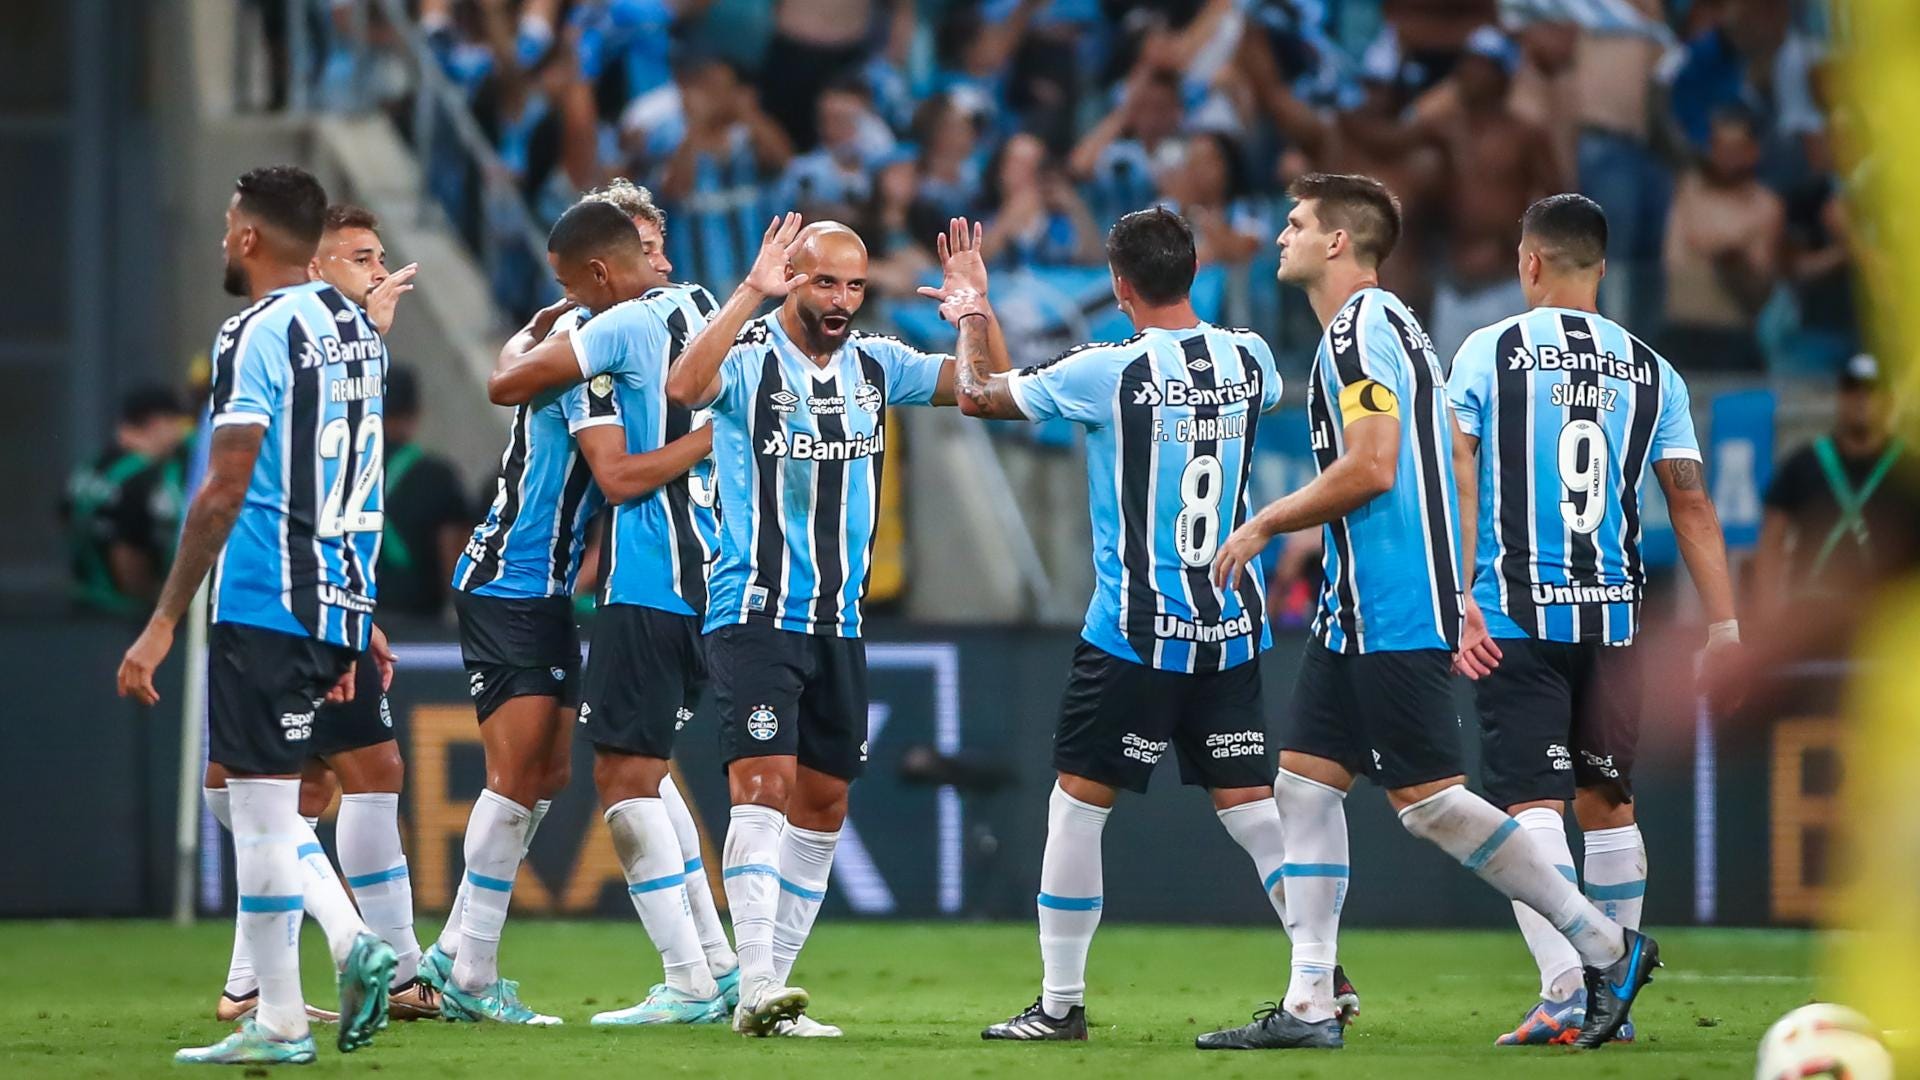 Grêmio vs Santos: A Clash of Brazilian Football Titans